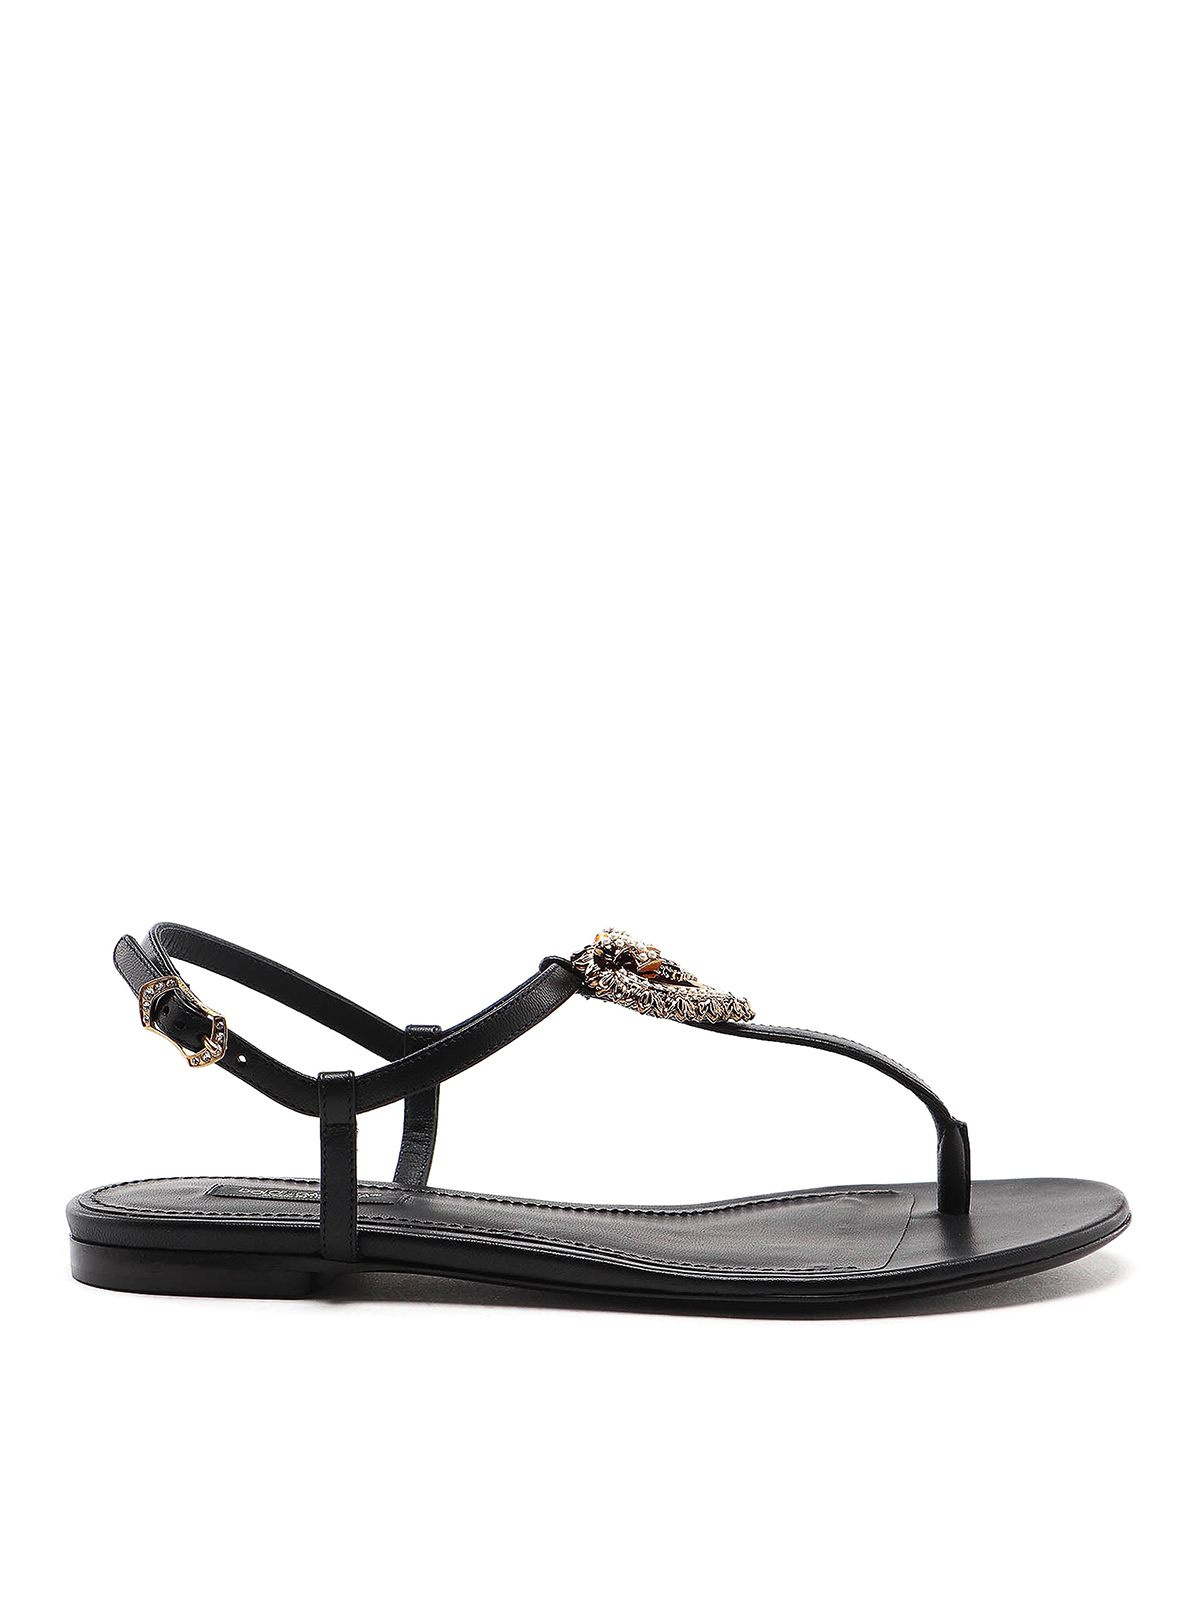 Dolce & Gabbana - Devotion thongs - sandals - CQ0353AX19180999 | iKRIX.com